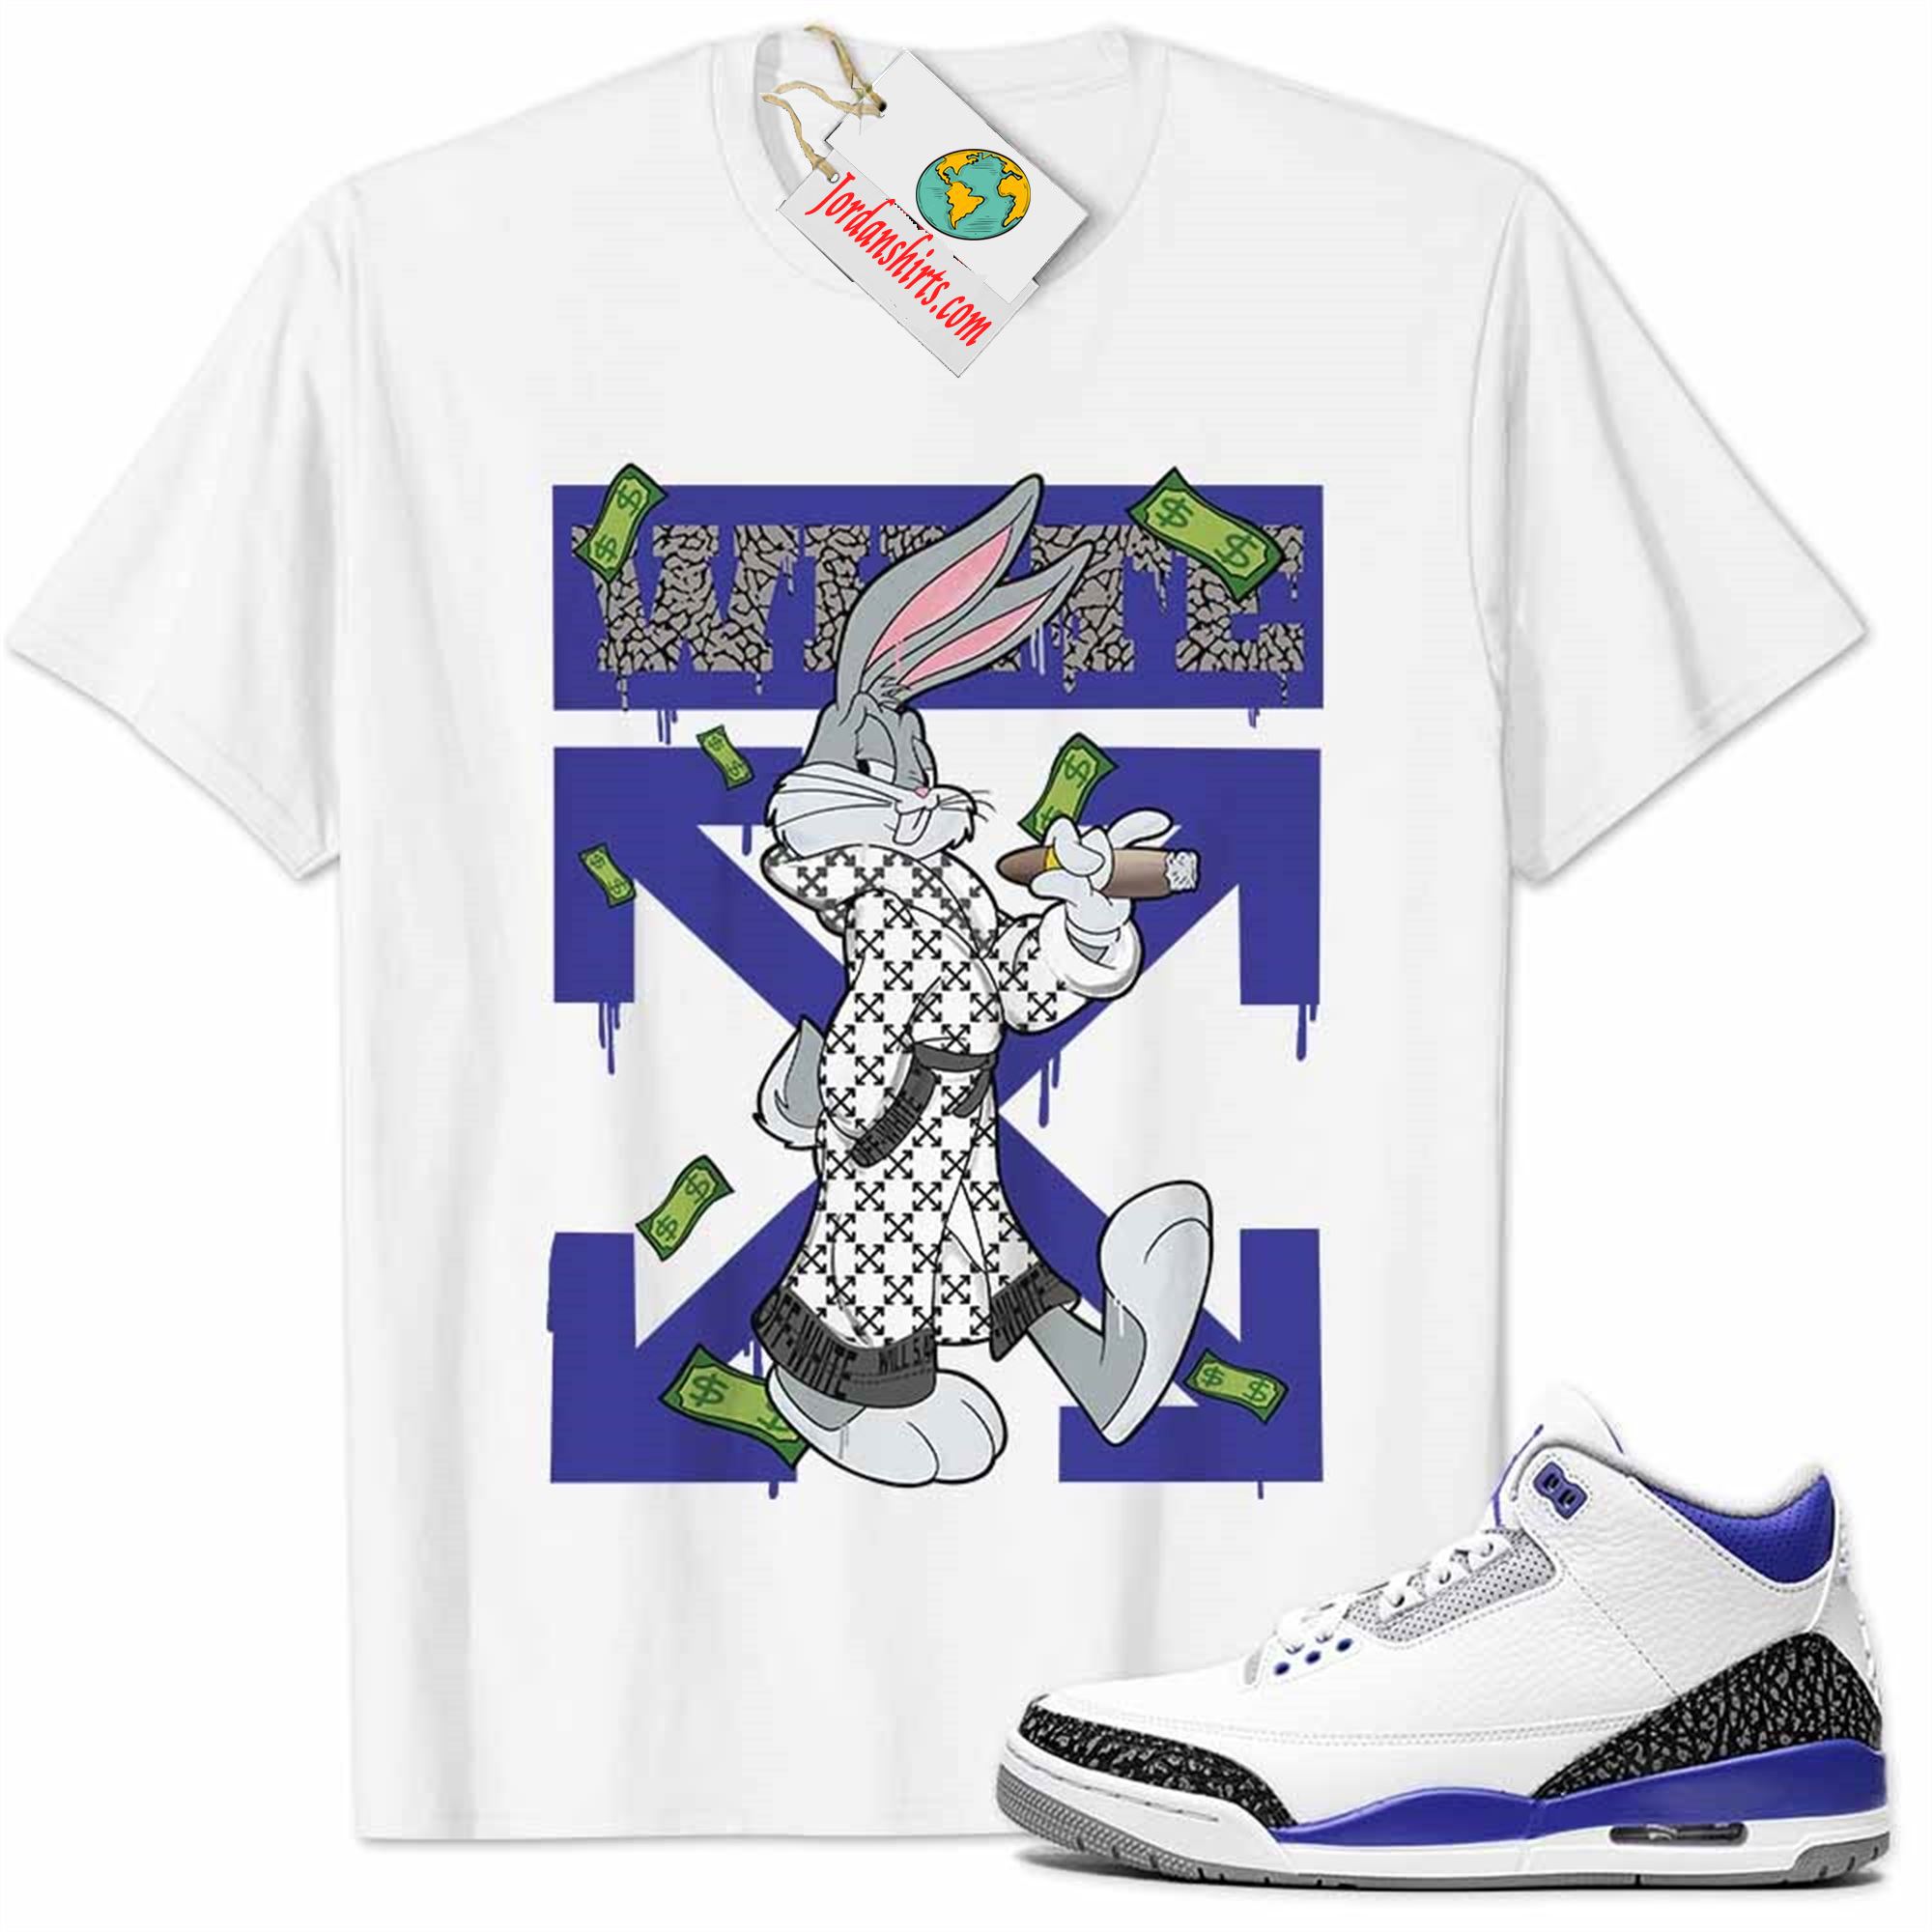 Jordan 3 Shirt, Jordan 3 Racer Blue Shirt Bug Bunny Smokes Weed Money Falling White Size Up To 5xl